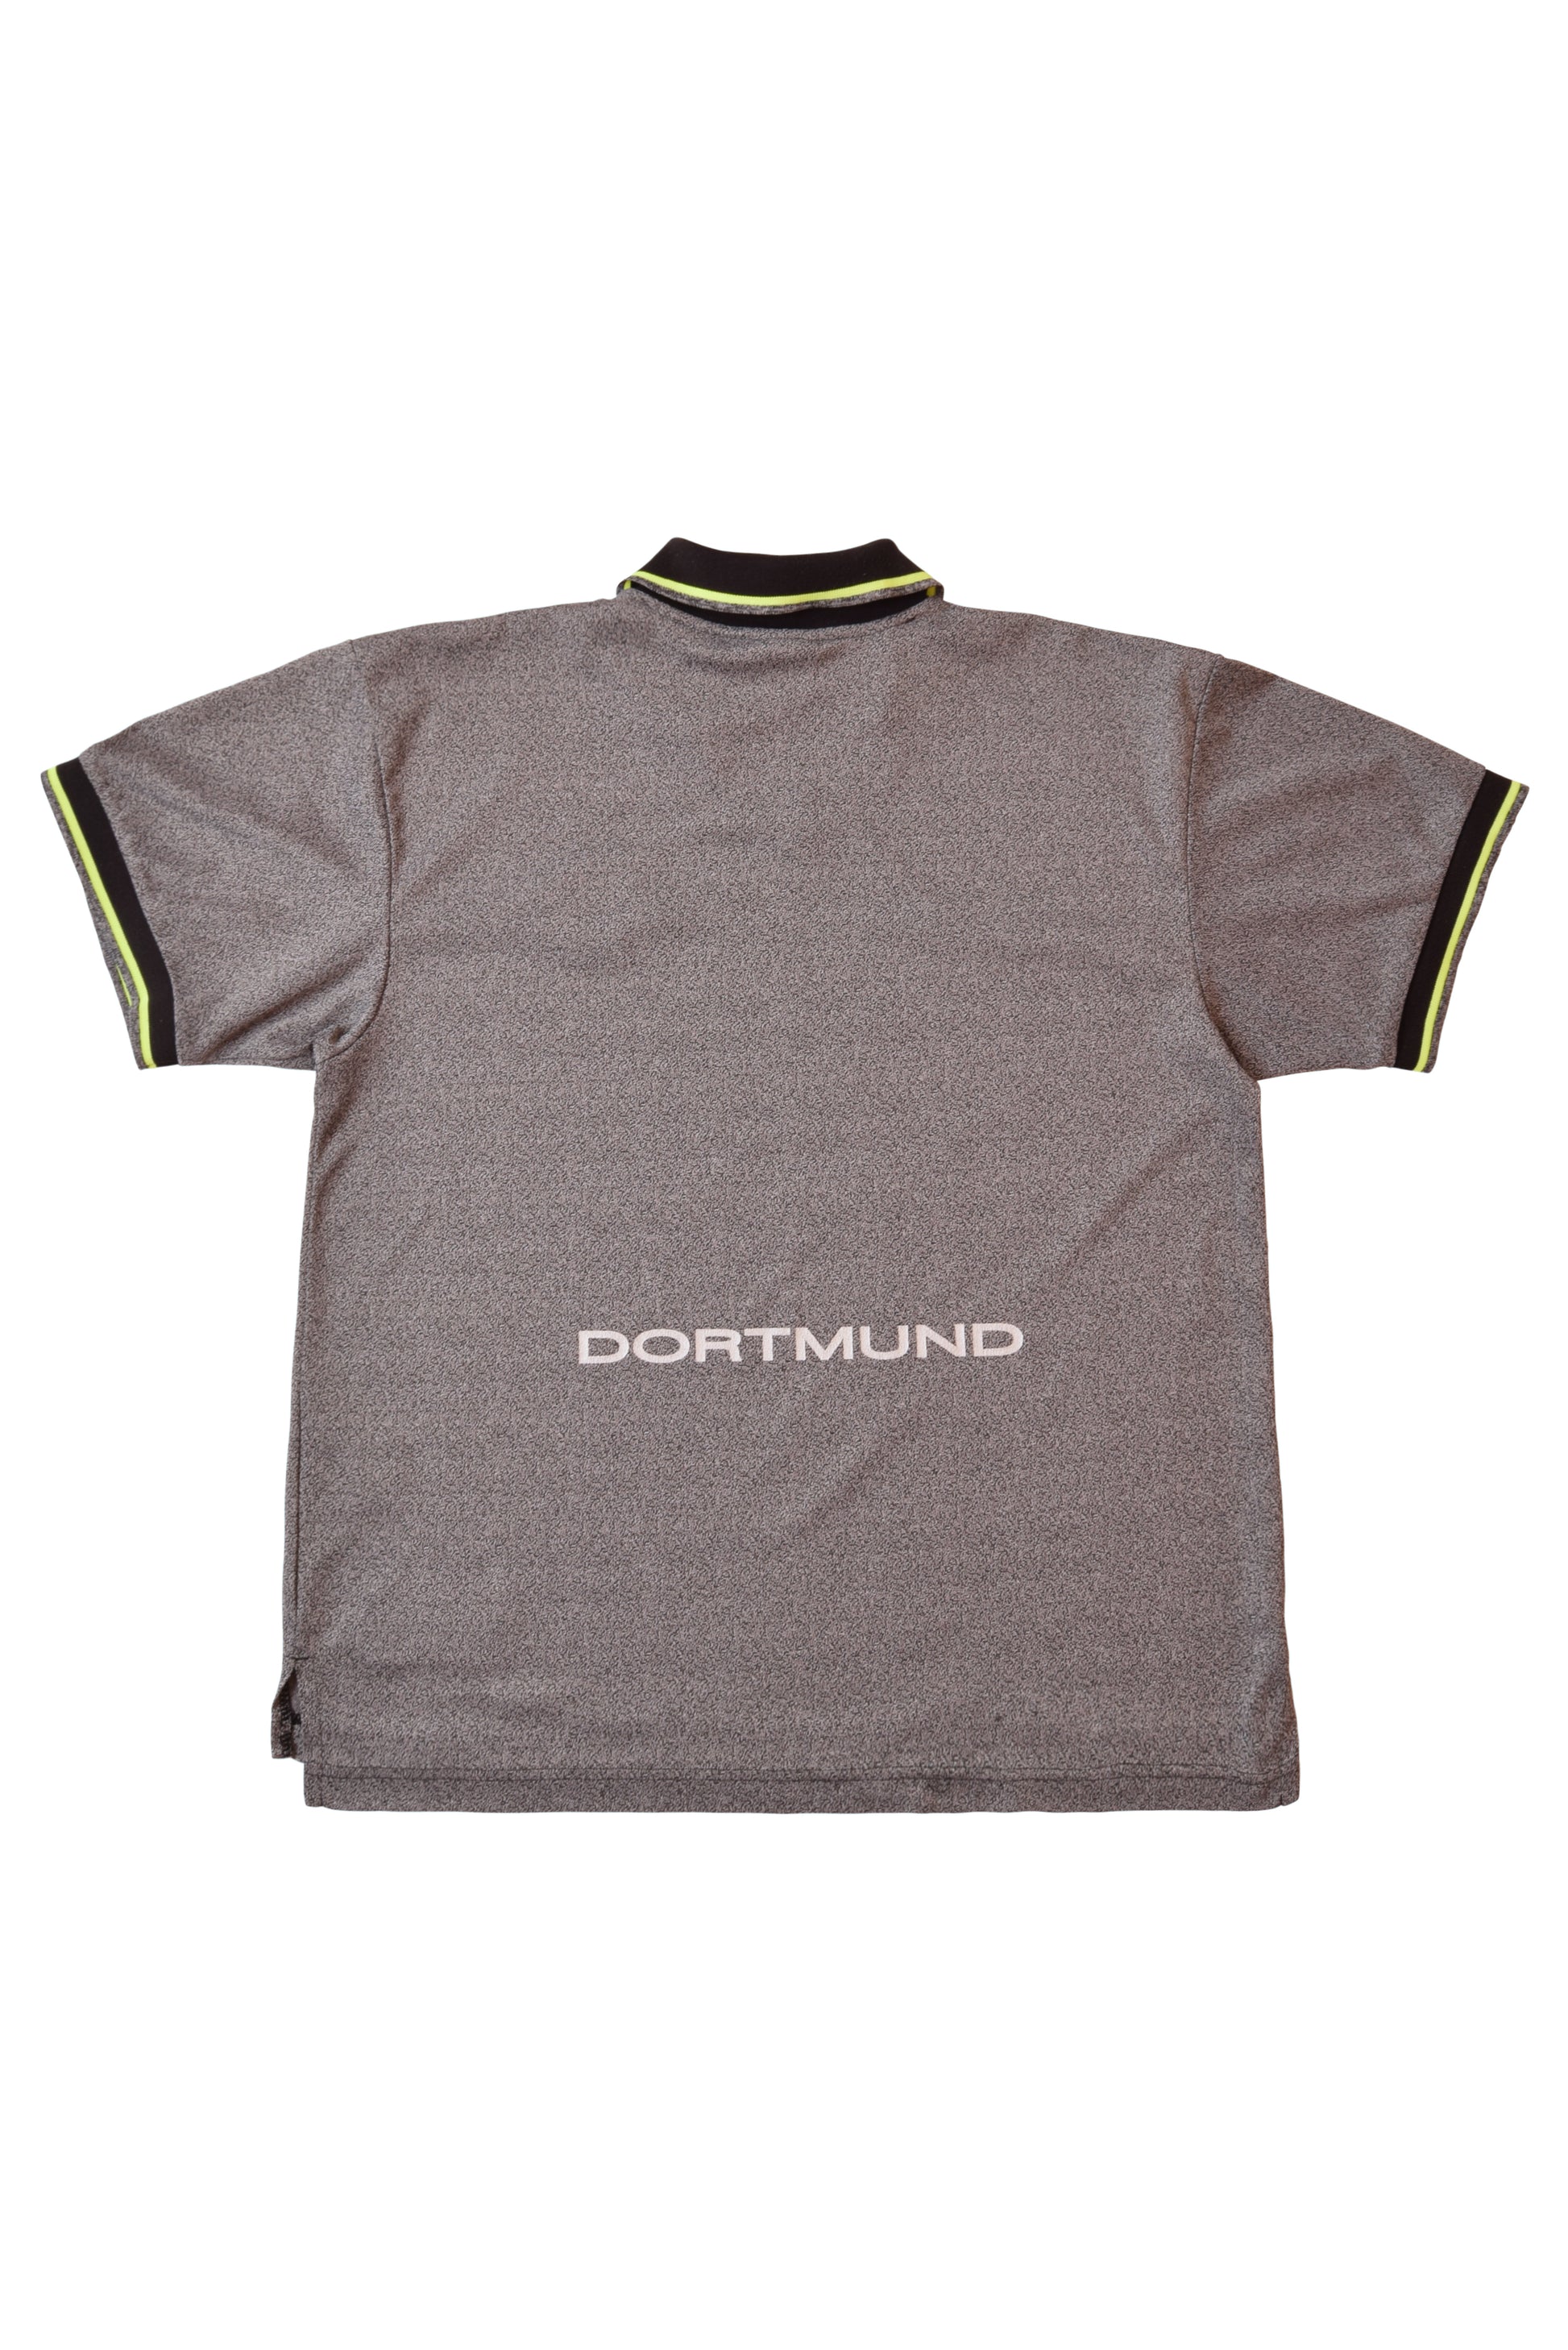 Vintage Borussia Dortmund BVB NikeTeam 1997-1998 Football Shirt Size L Die Continental Made in UK Grey Away